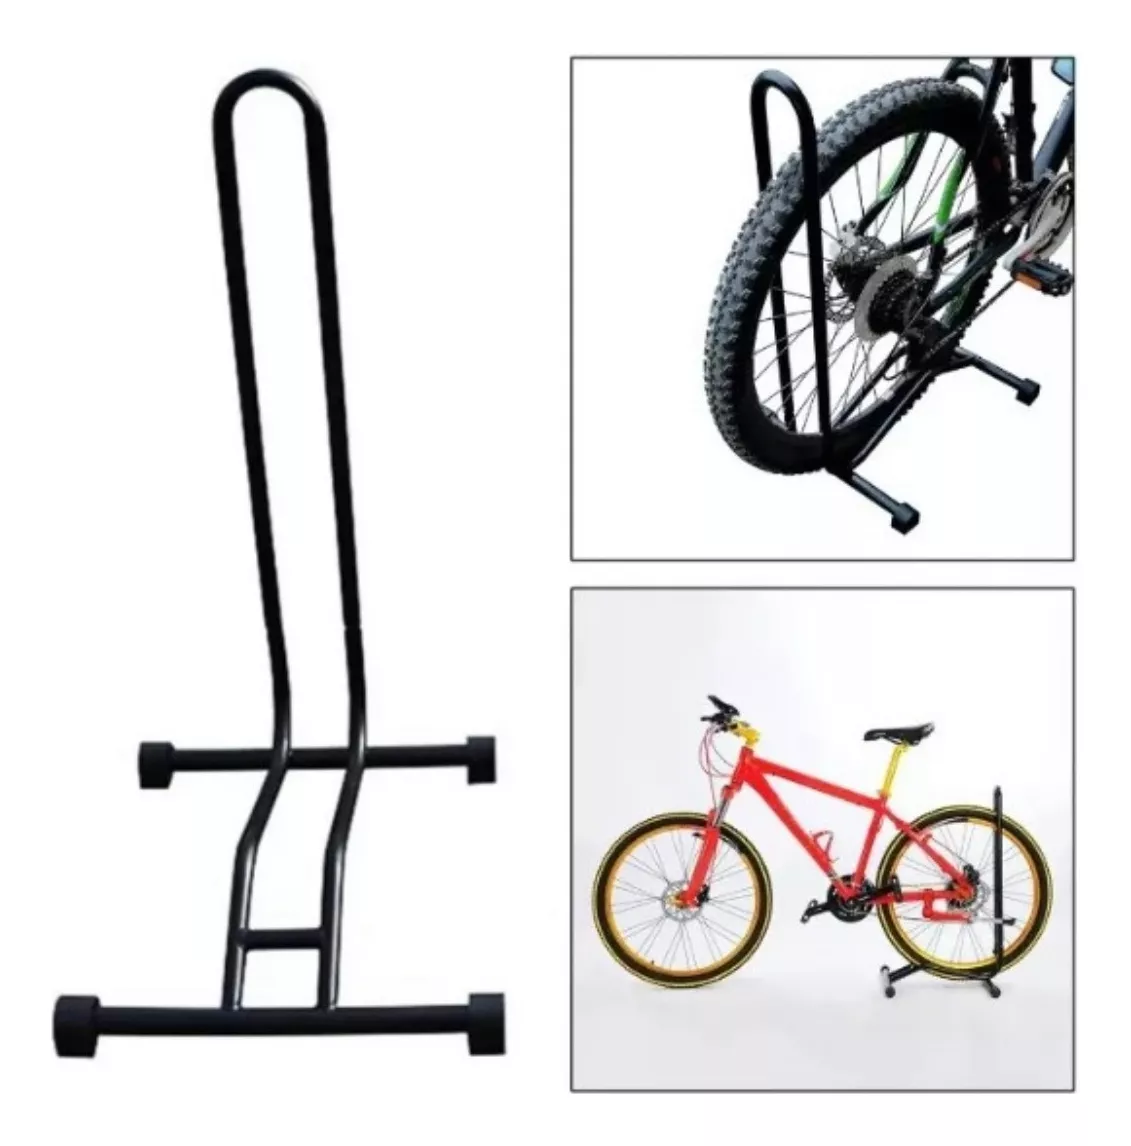 Segunda imagen para búsqueda de soporte para bicicleta